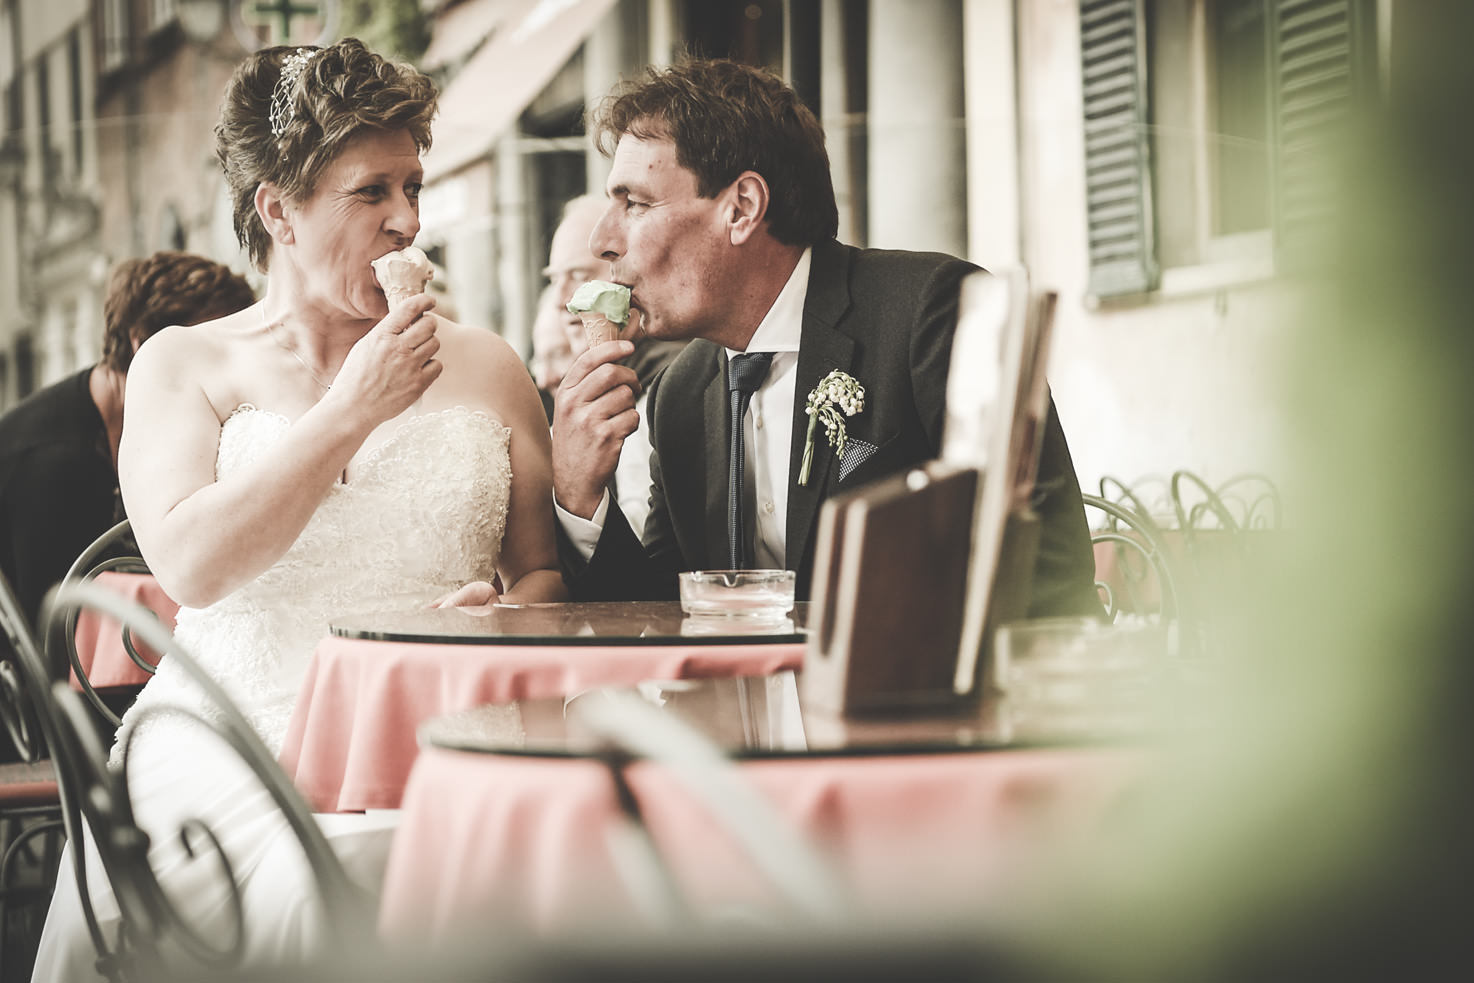 Bridal couple enjoying Italian gelato